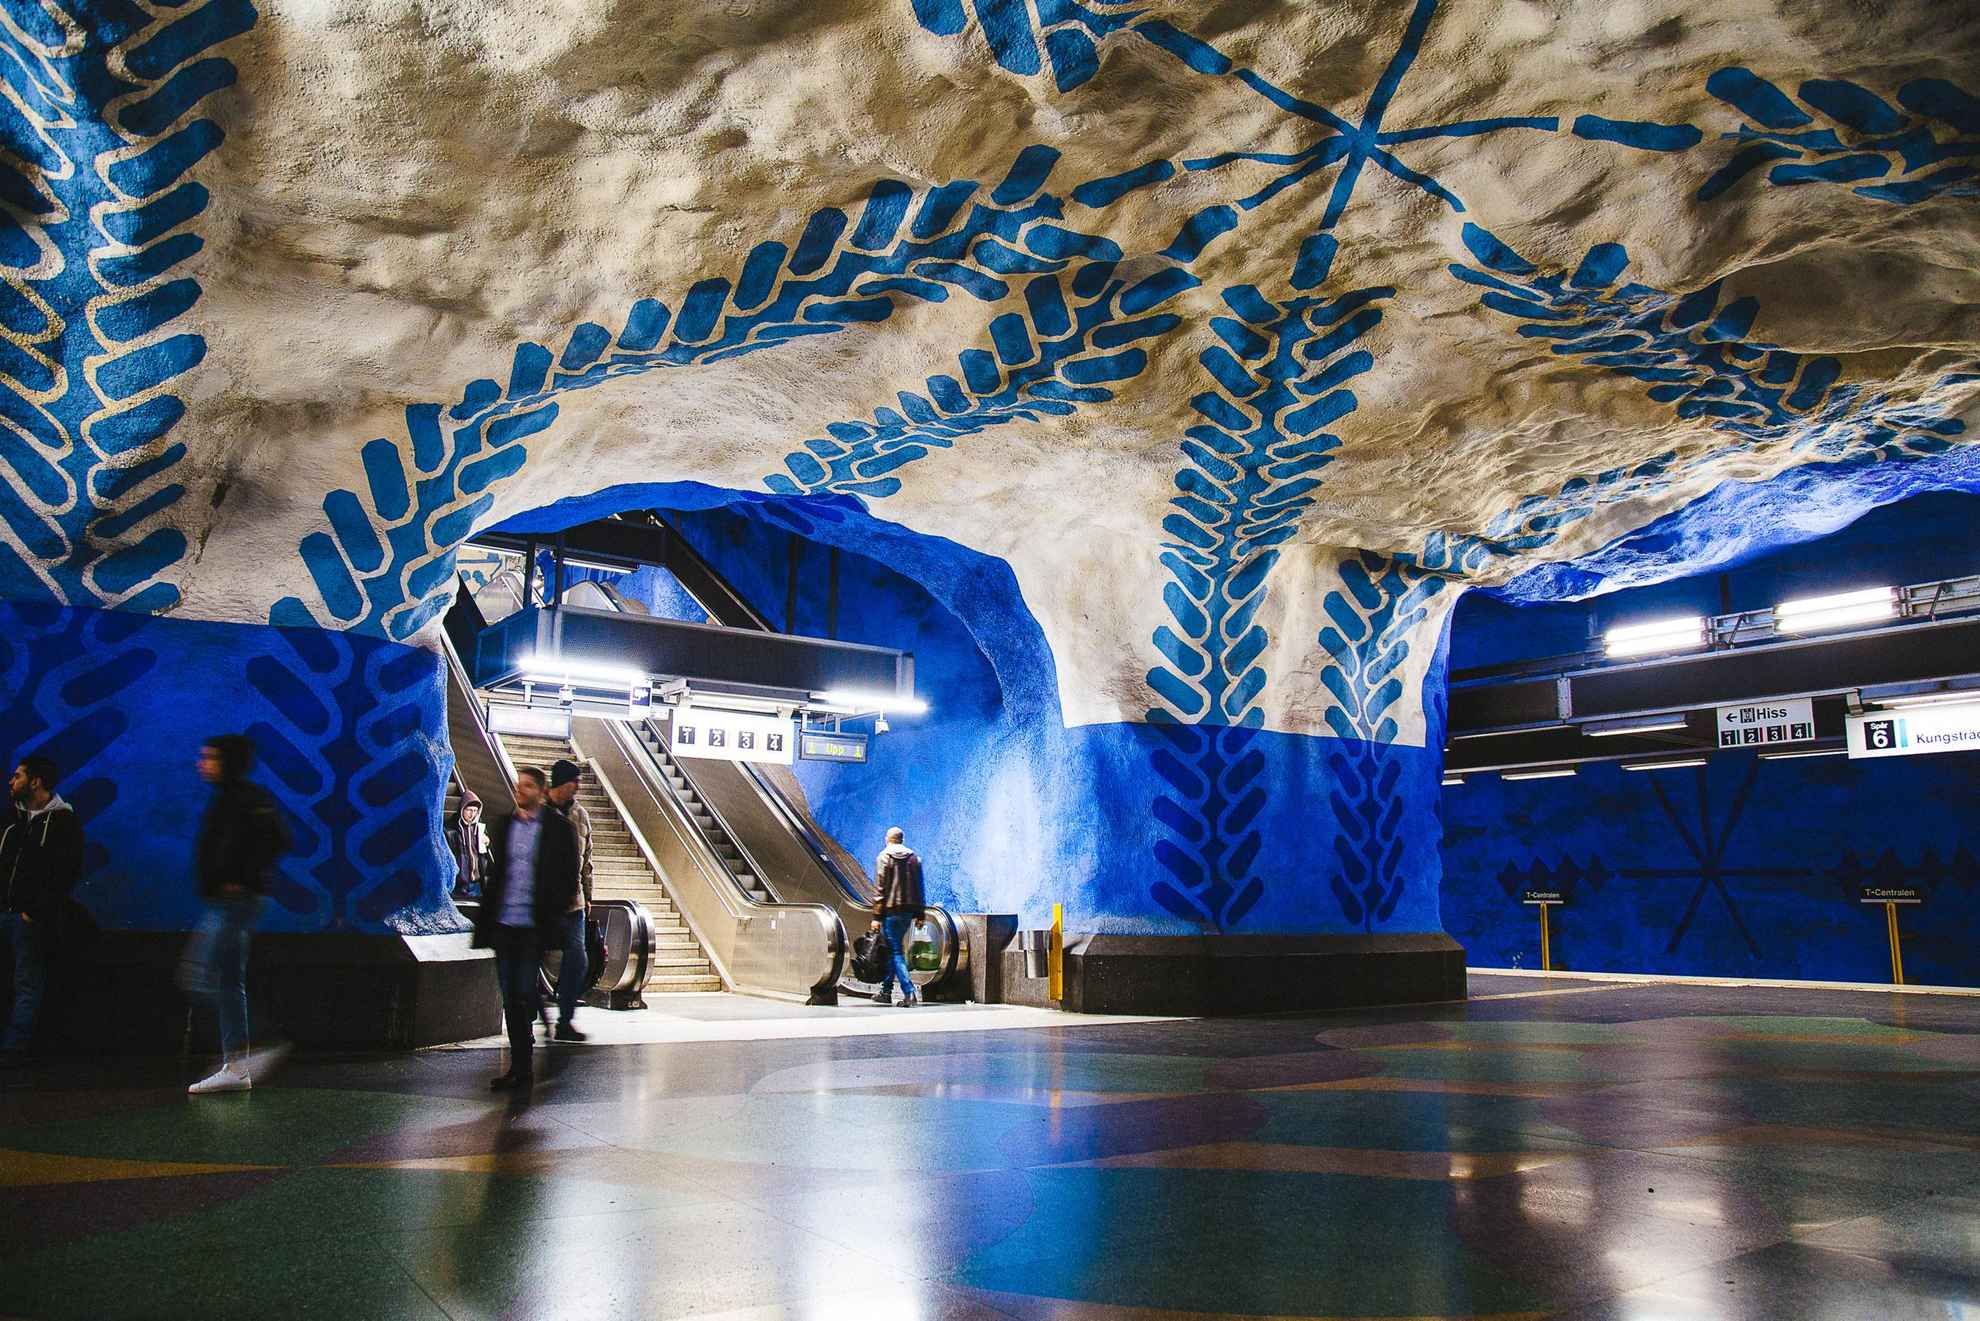 Subway art, Stockholm